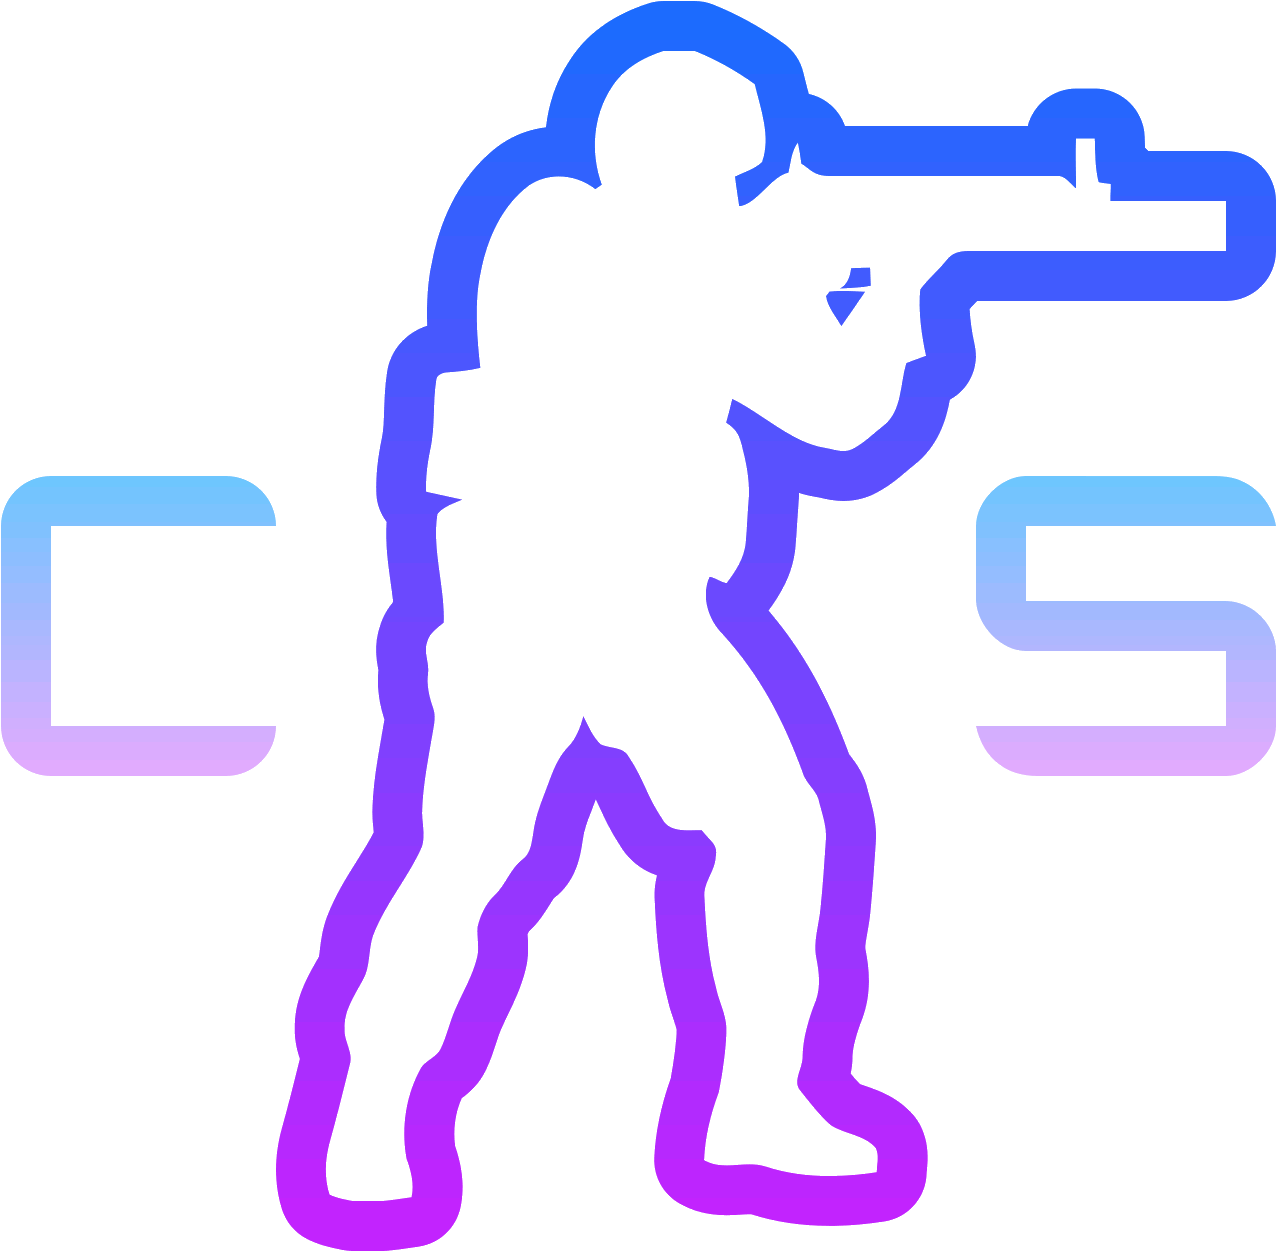 Go go icon. Эмблема КС го. Значок контр страйк. Counter-Strike Global Offensive иконка. CS 1.6 логотип.